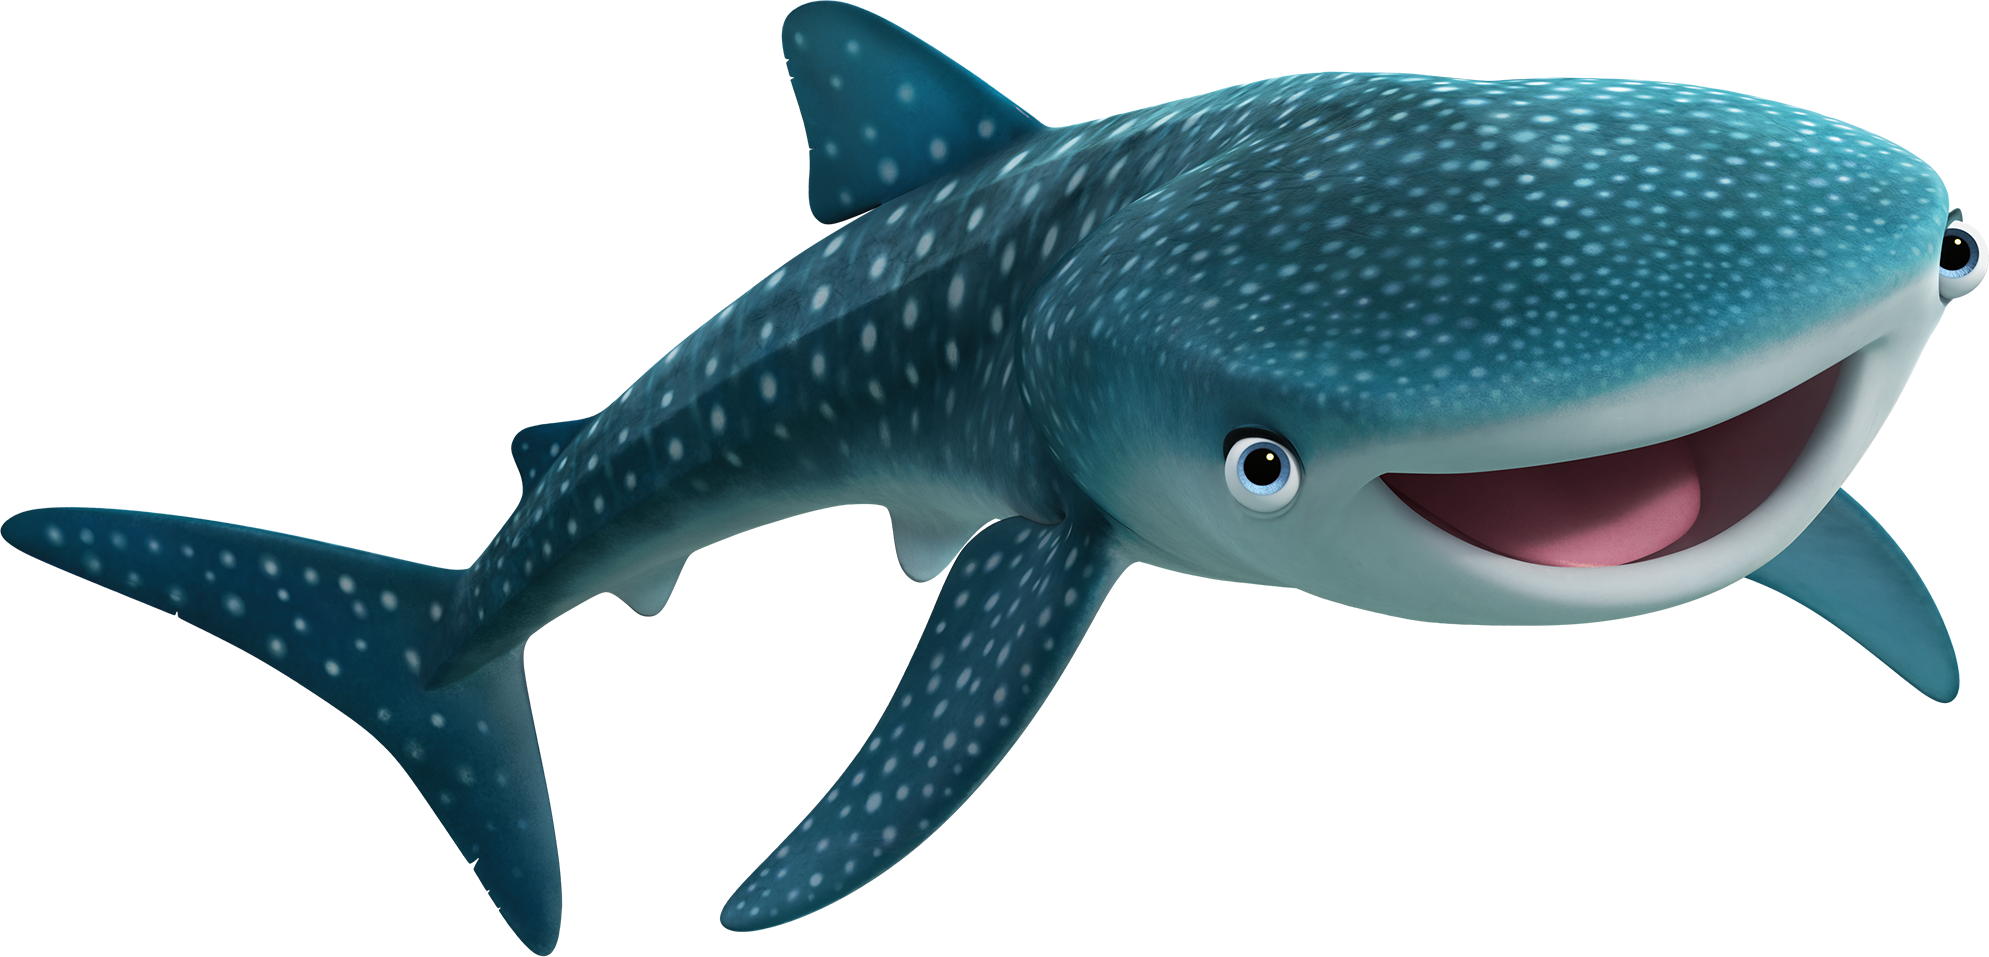 Shark Nemo Fish Pixar YouTube nemo png download 1989*957 Free